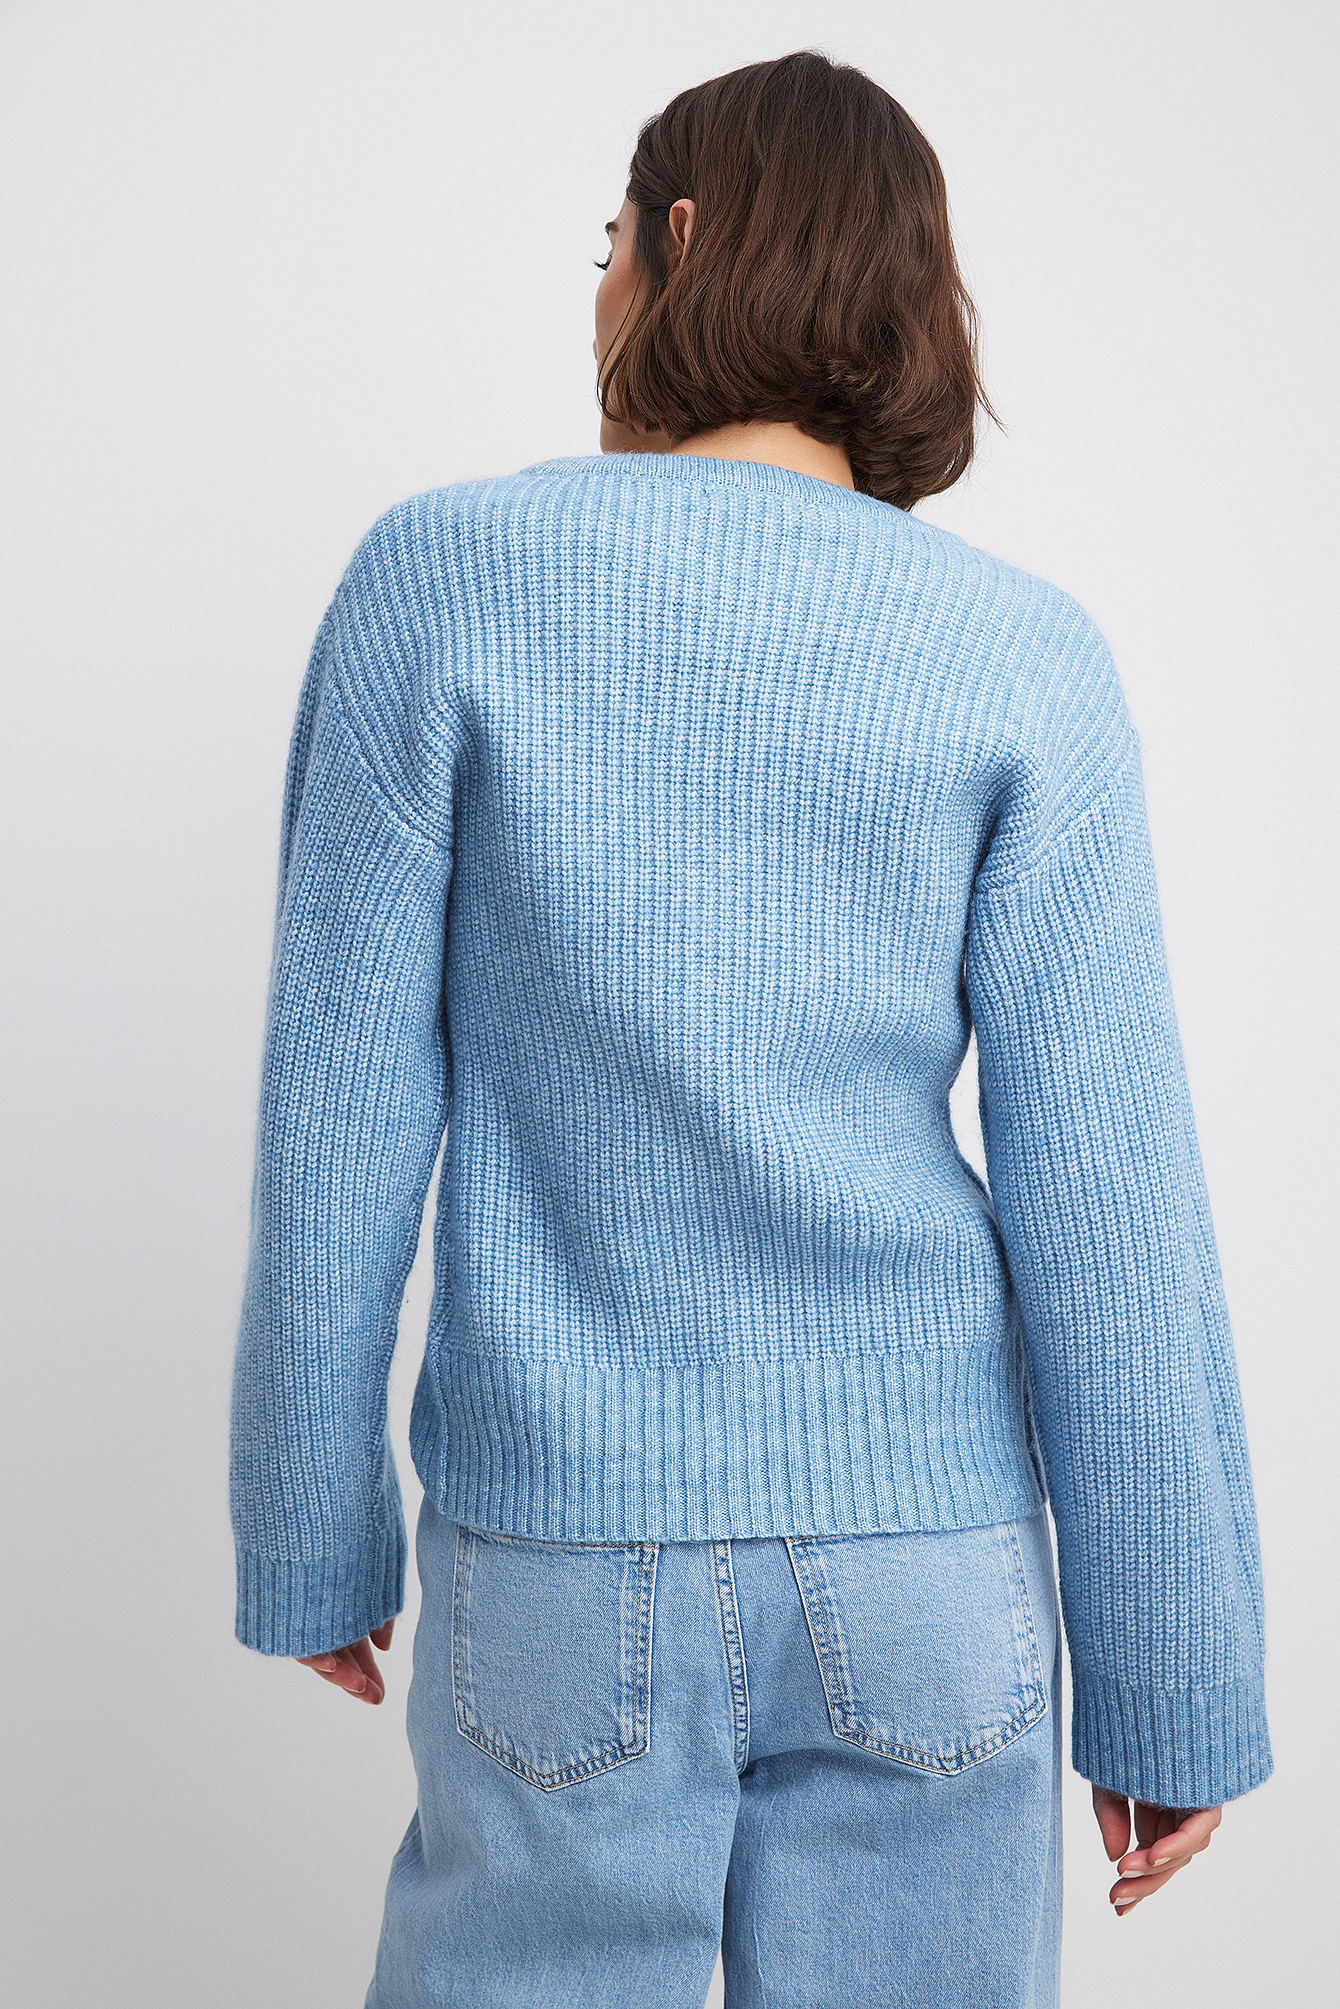 KOOKAI Blue Thin Knit Cowl Neck Button Cardigan Sweater Top 1 S